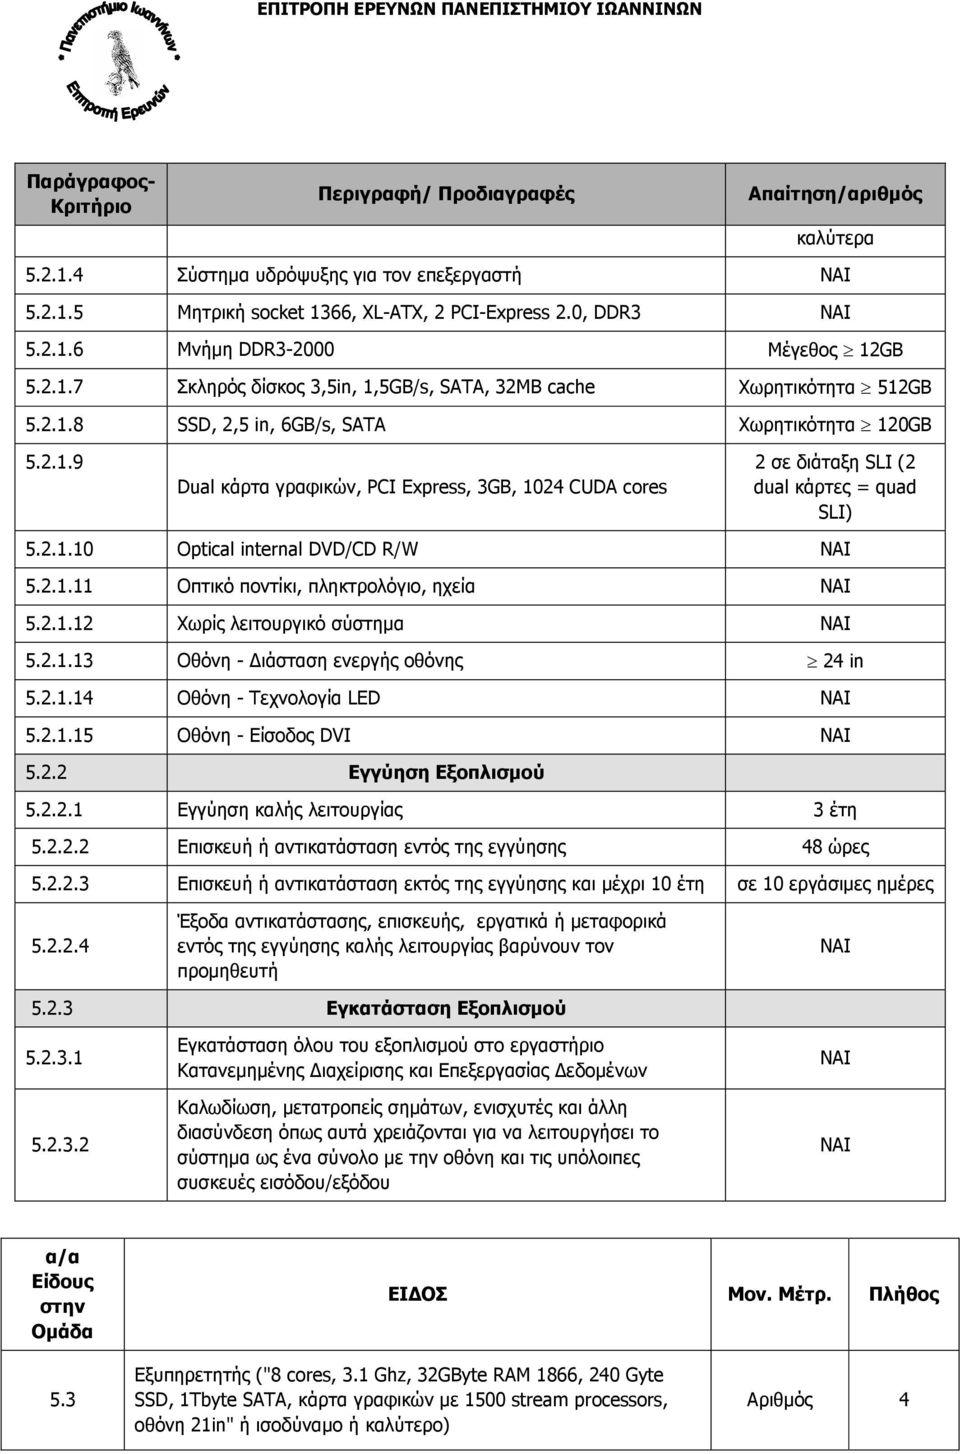 2.1.10 Optical internal DVD/CD R/W ΝΑΙ 5.2.1.11 Οπτικό ποντίκι, πληκτρολόγιο, ηχεία ΝΑΙ 5.2.1.12 Χωρίς λειτουργικό σύστηµα ΝΑΙ 5.2.1.13 Οθόνη - ιάσταση ενεργής οθόνης 24 in 5.2.1.14 Οθόνη - Τεχνολογία LED NAI 5.